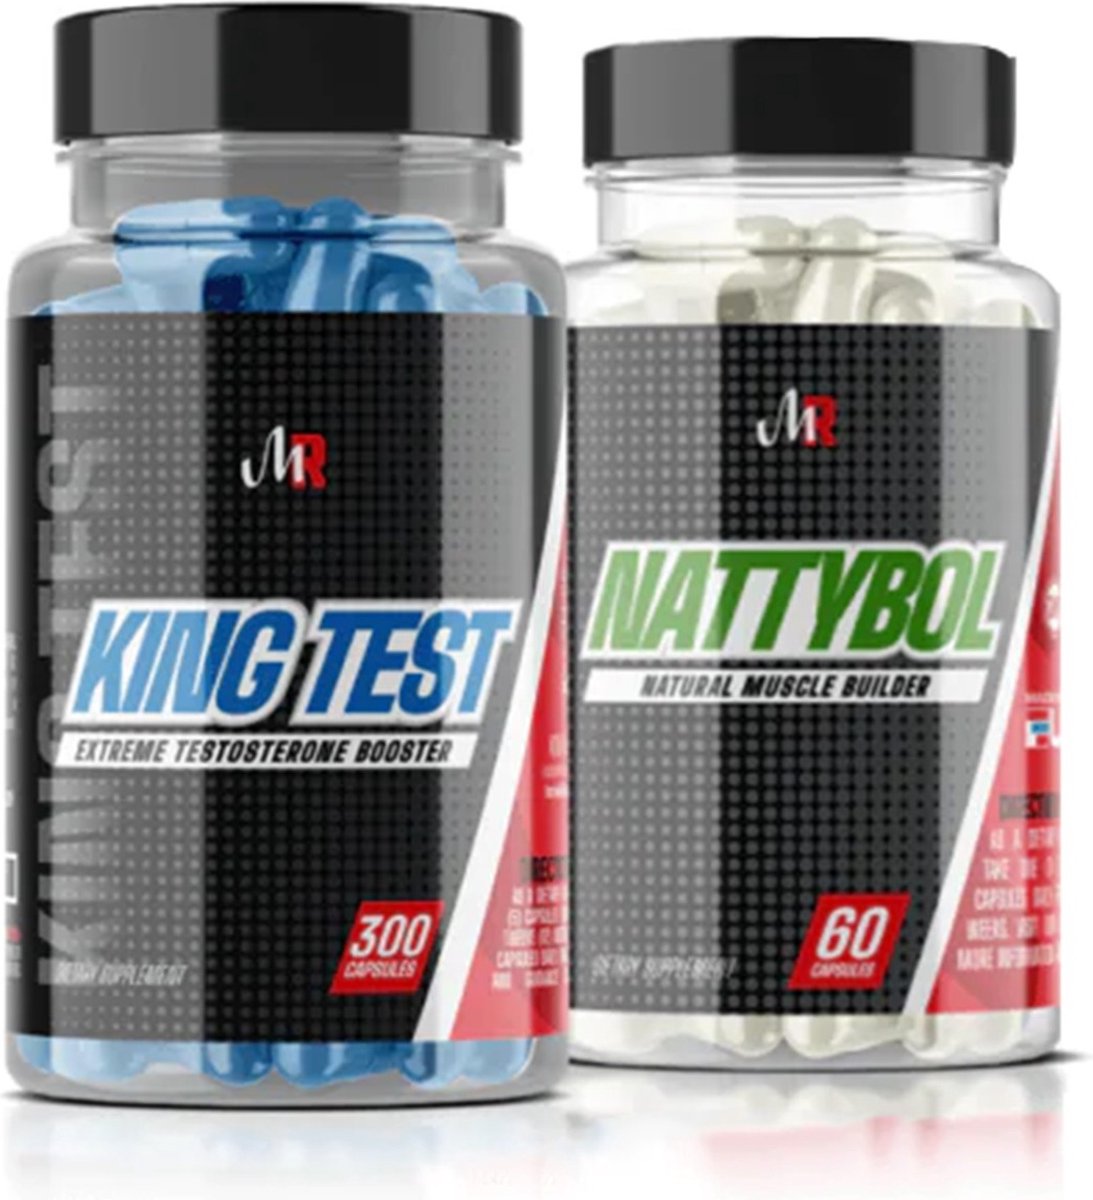 Gains Stack - Nattybol + King Test - Testosterone booster